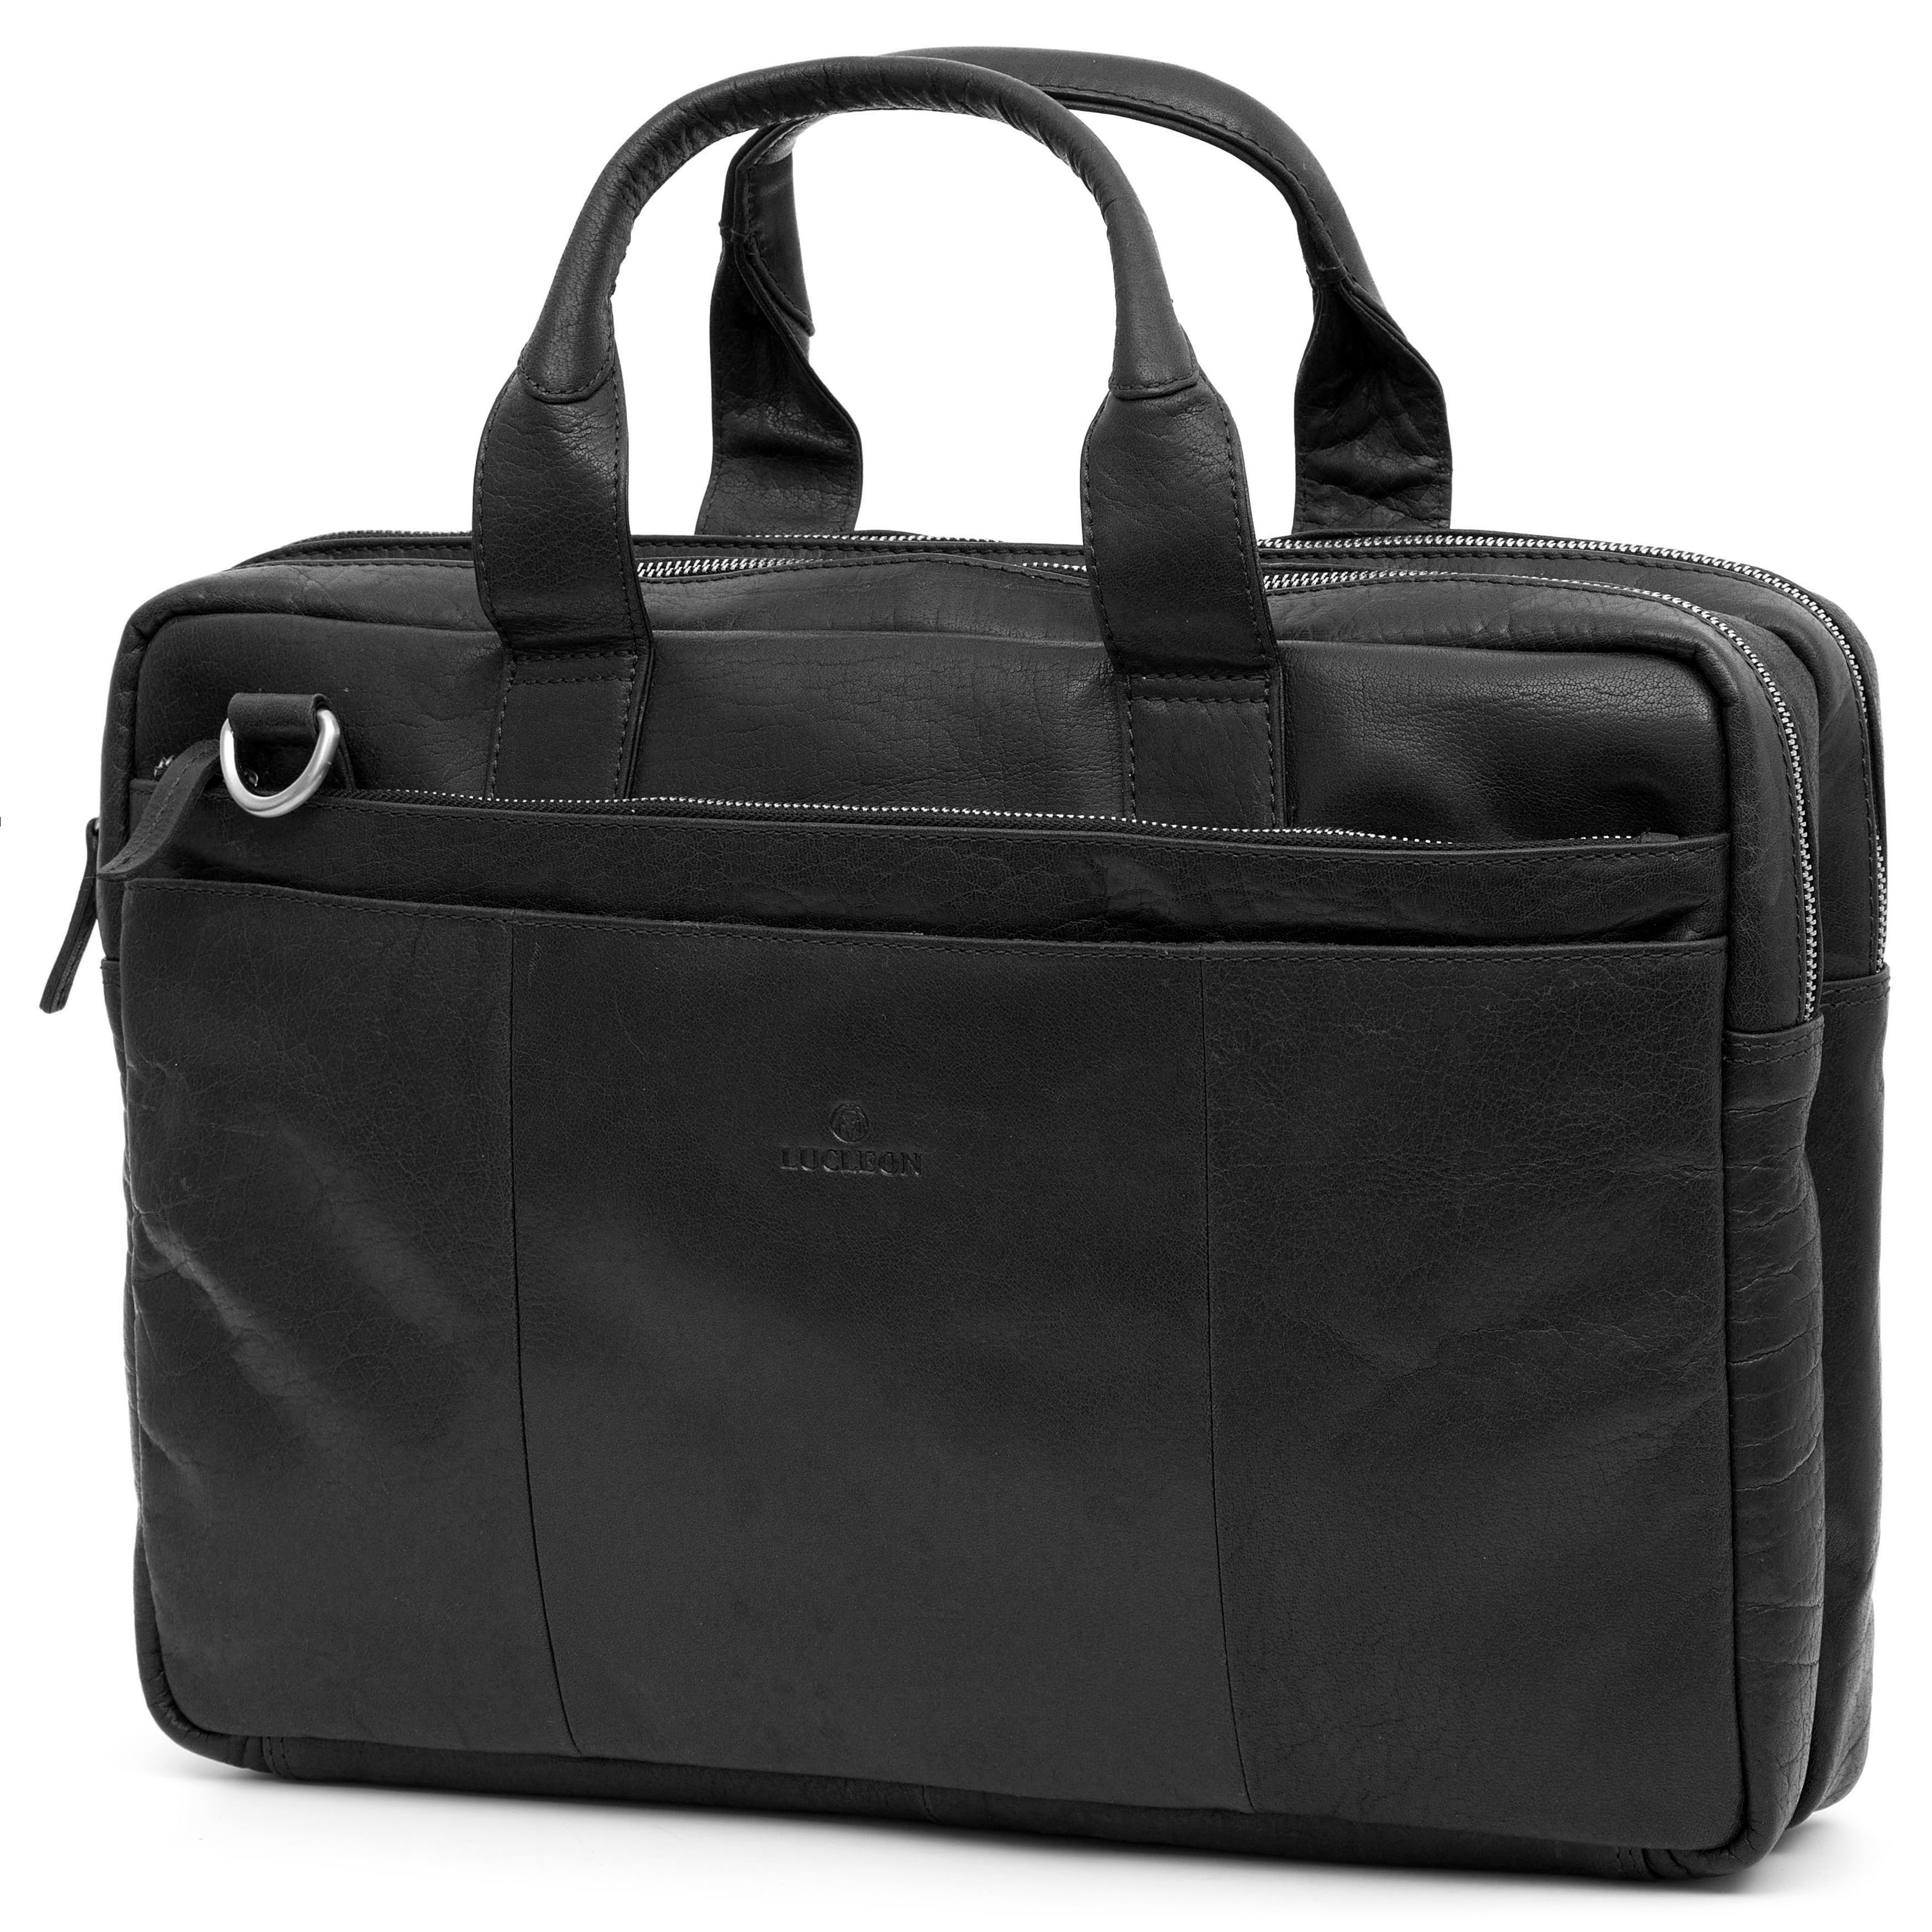 Montreal Black Leather Laptop Bag